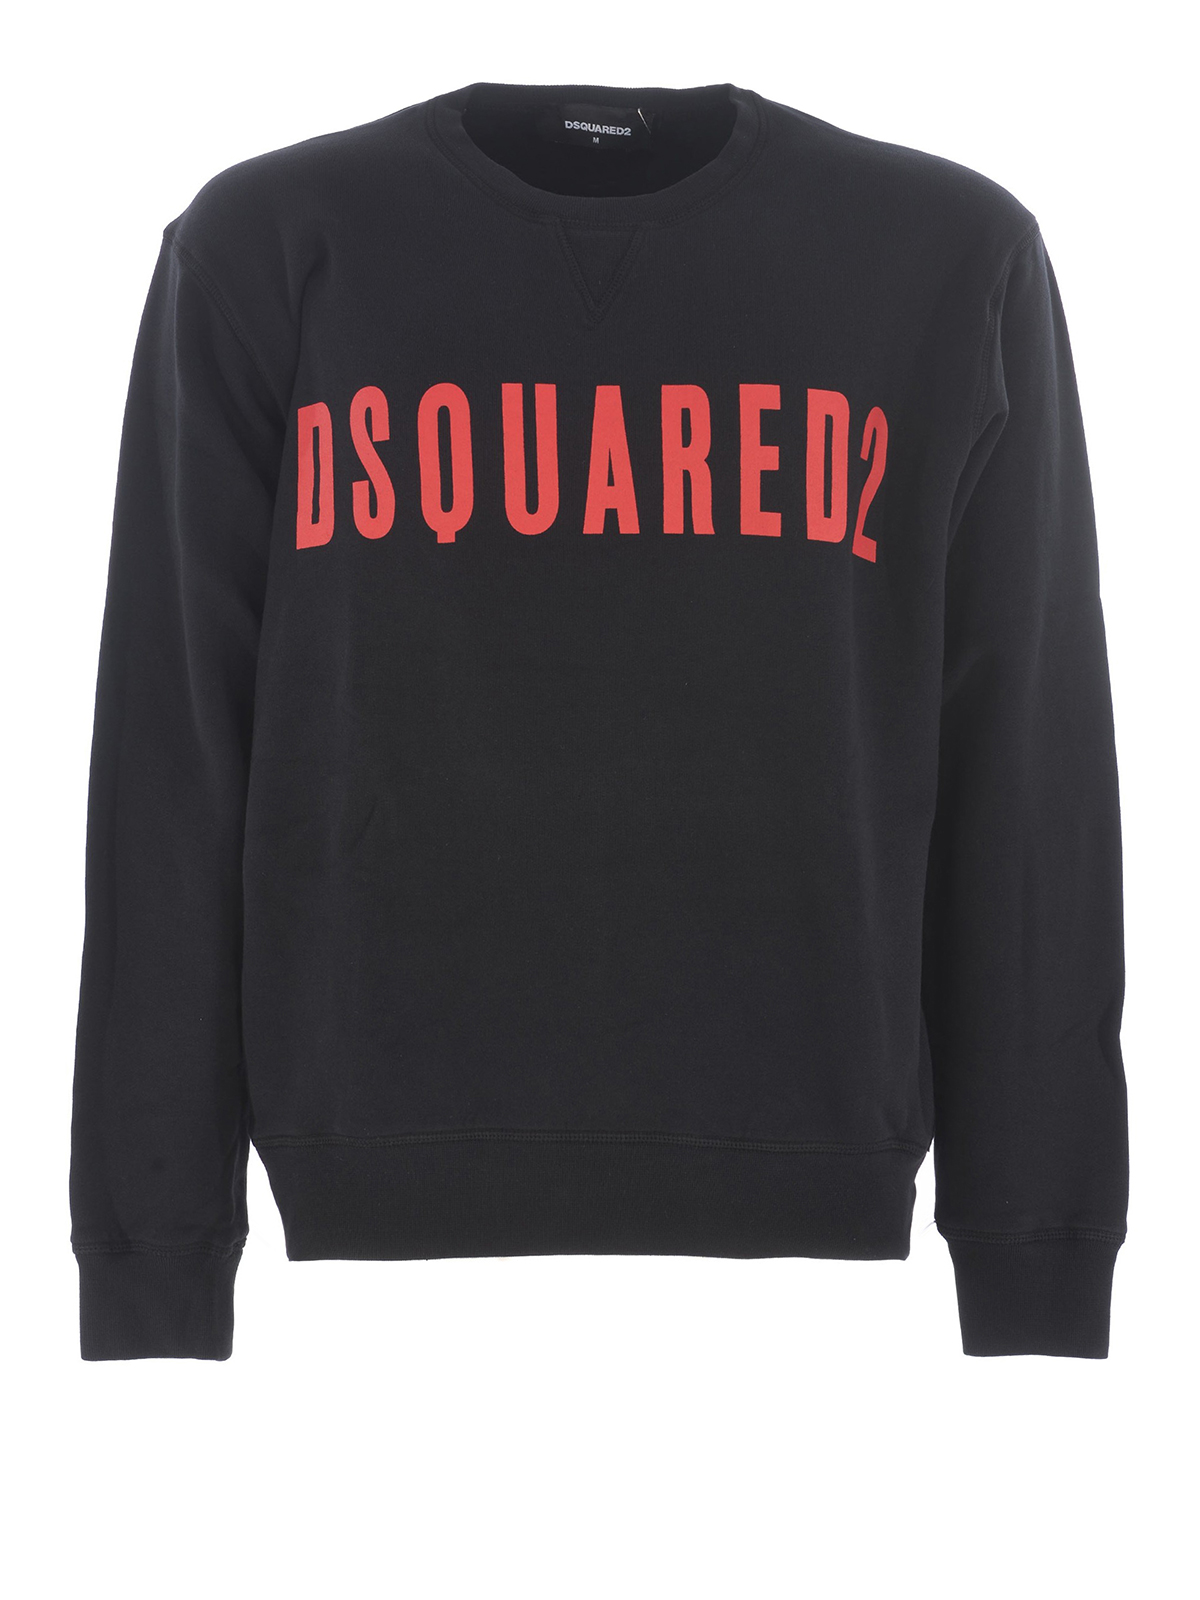 Fremkald symmetri fleksibel Sweatshirts & Sweaters Dsquared2 - Logo print black cotton sweatshirt -  S71GU0317S25030900